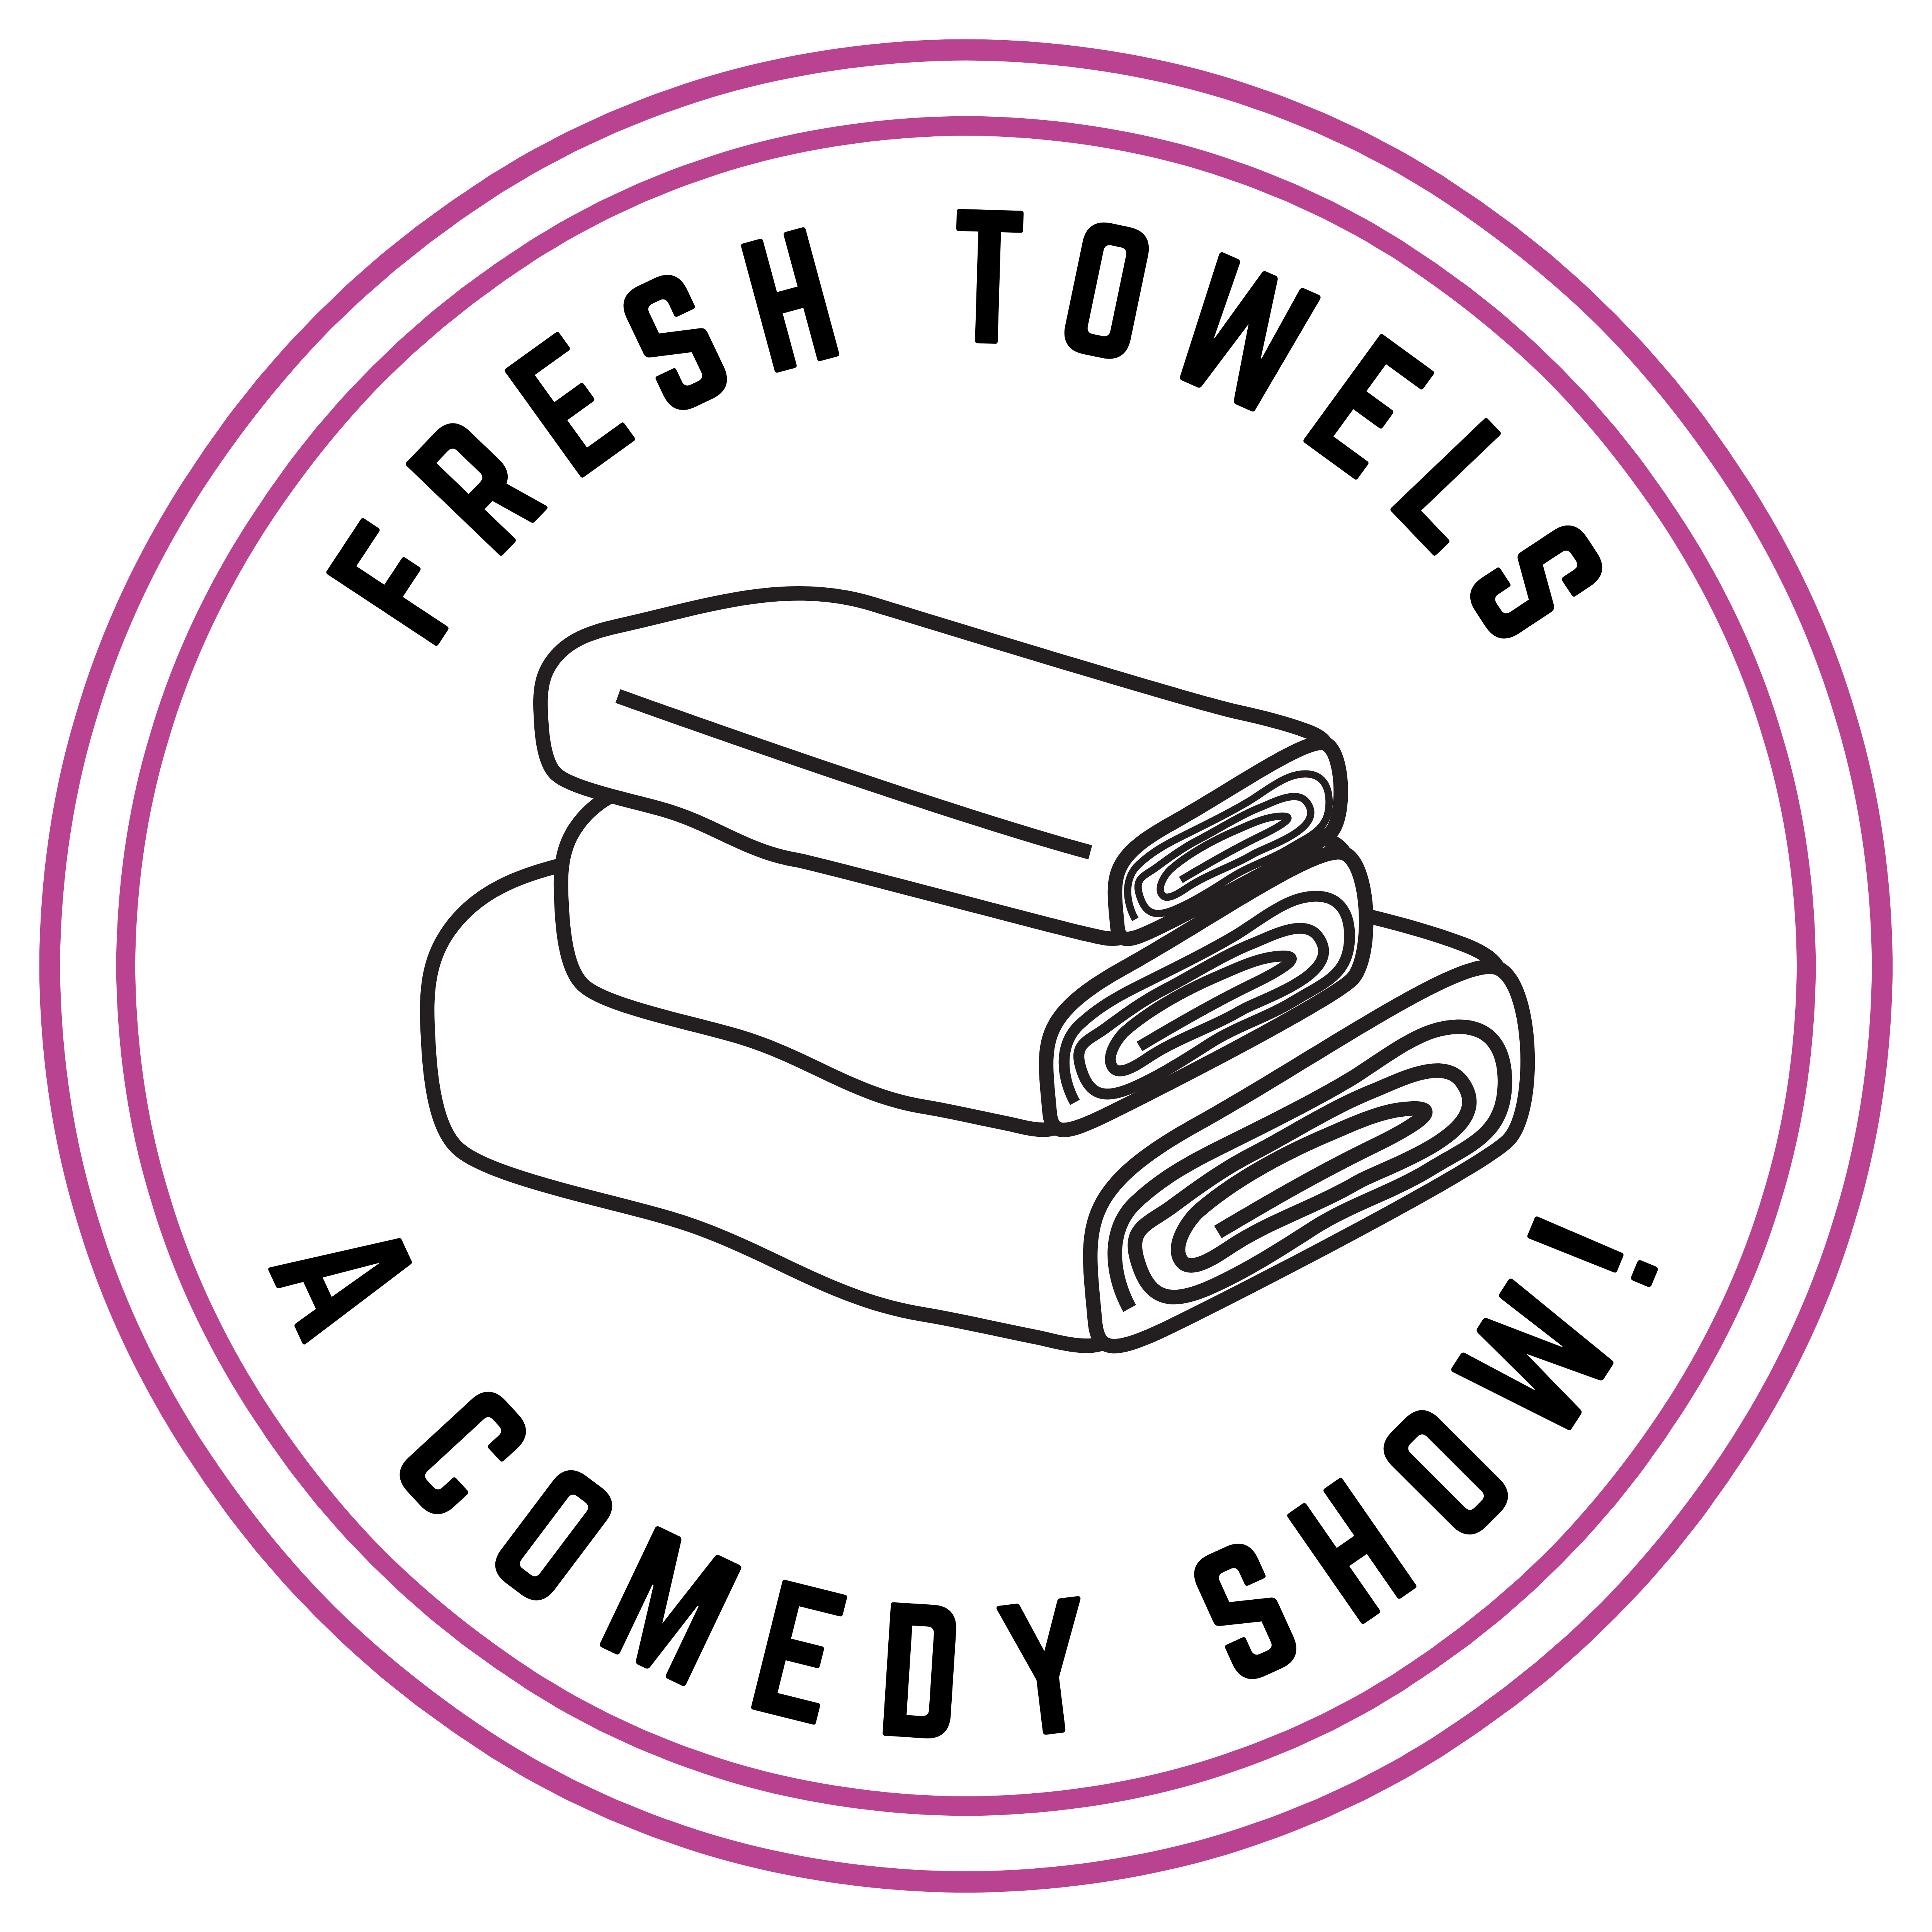 FRESH TOWELS—A COMEDY SHOW!